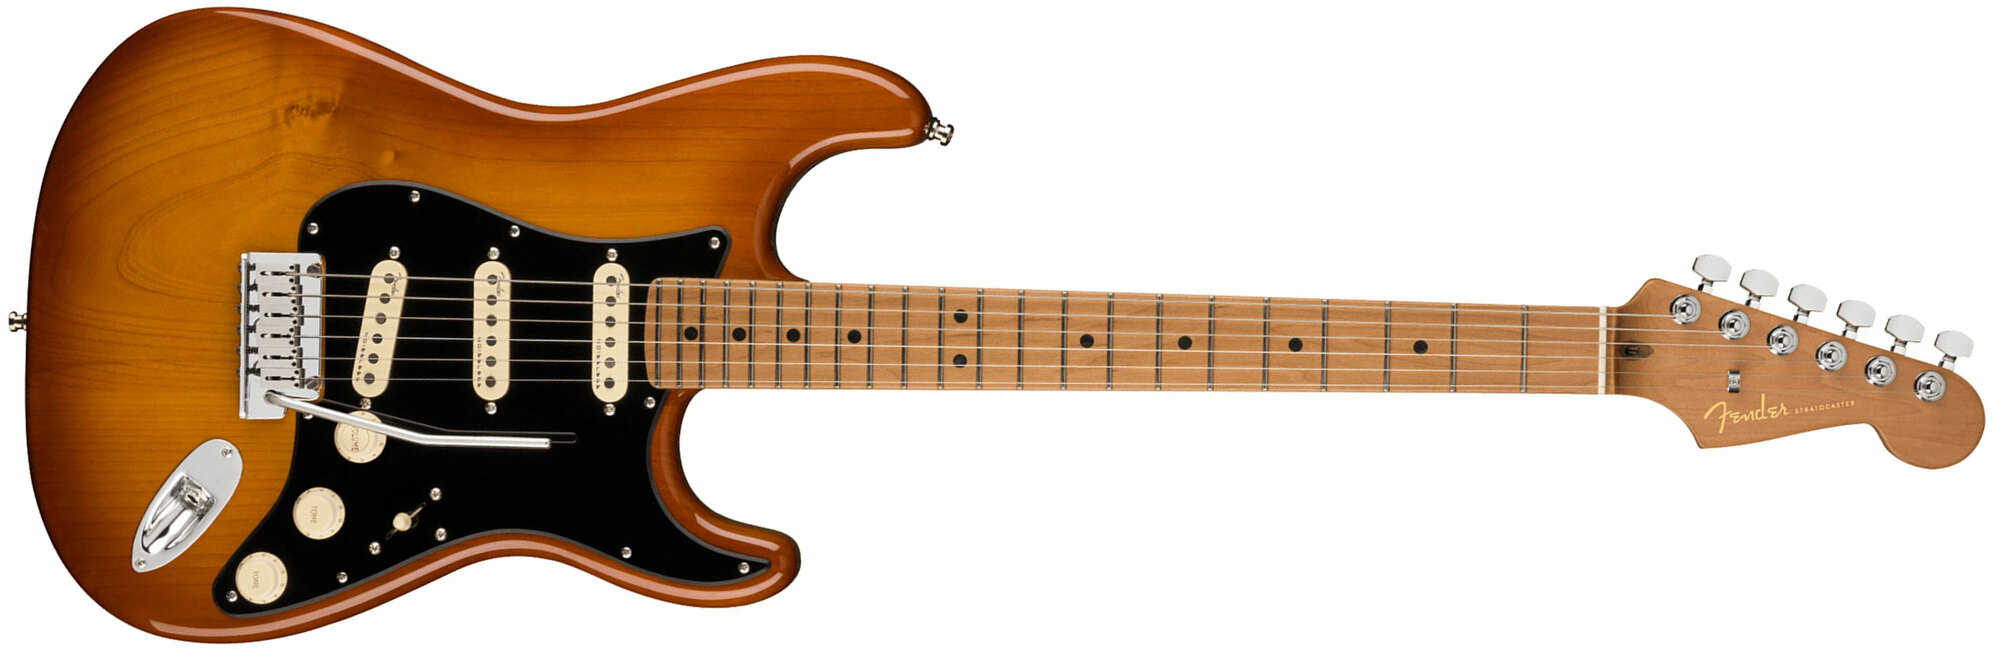 Fender Strat American Ultra Roasted Fretboard Ltd Usa 3s Trem Mn - Honey Burst - Elektrische gitaar in Str-vorm - Main picture